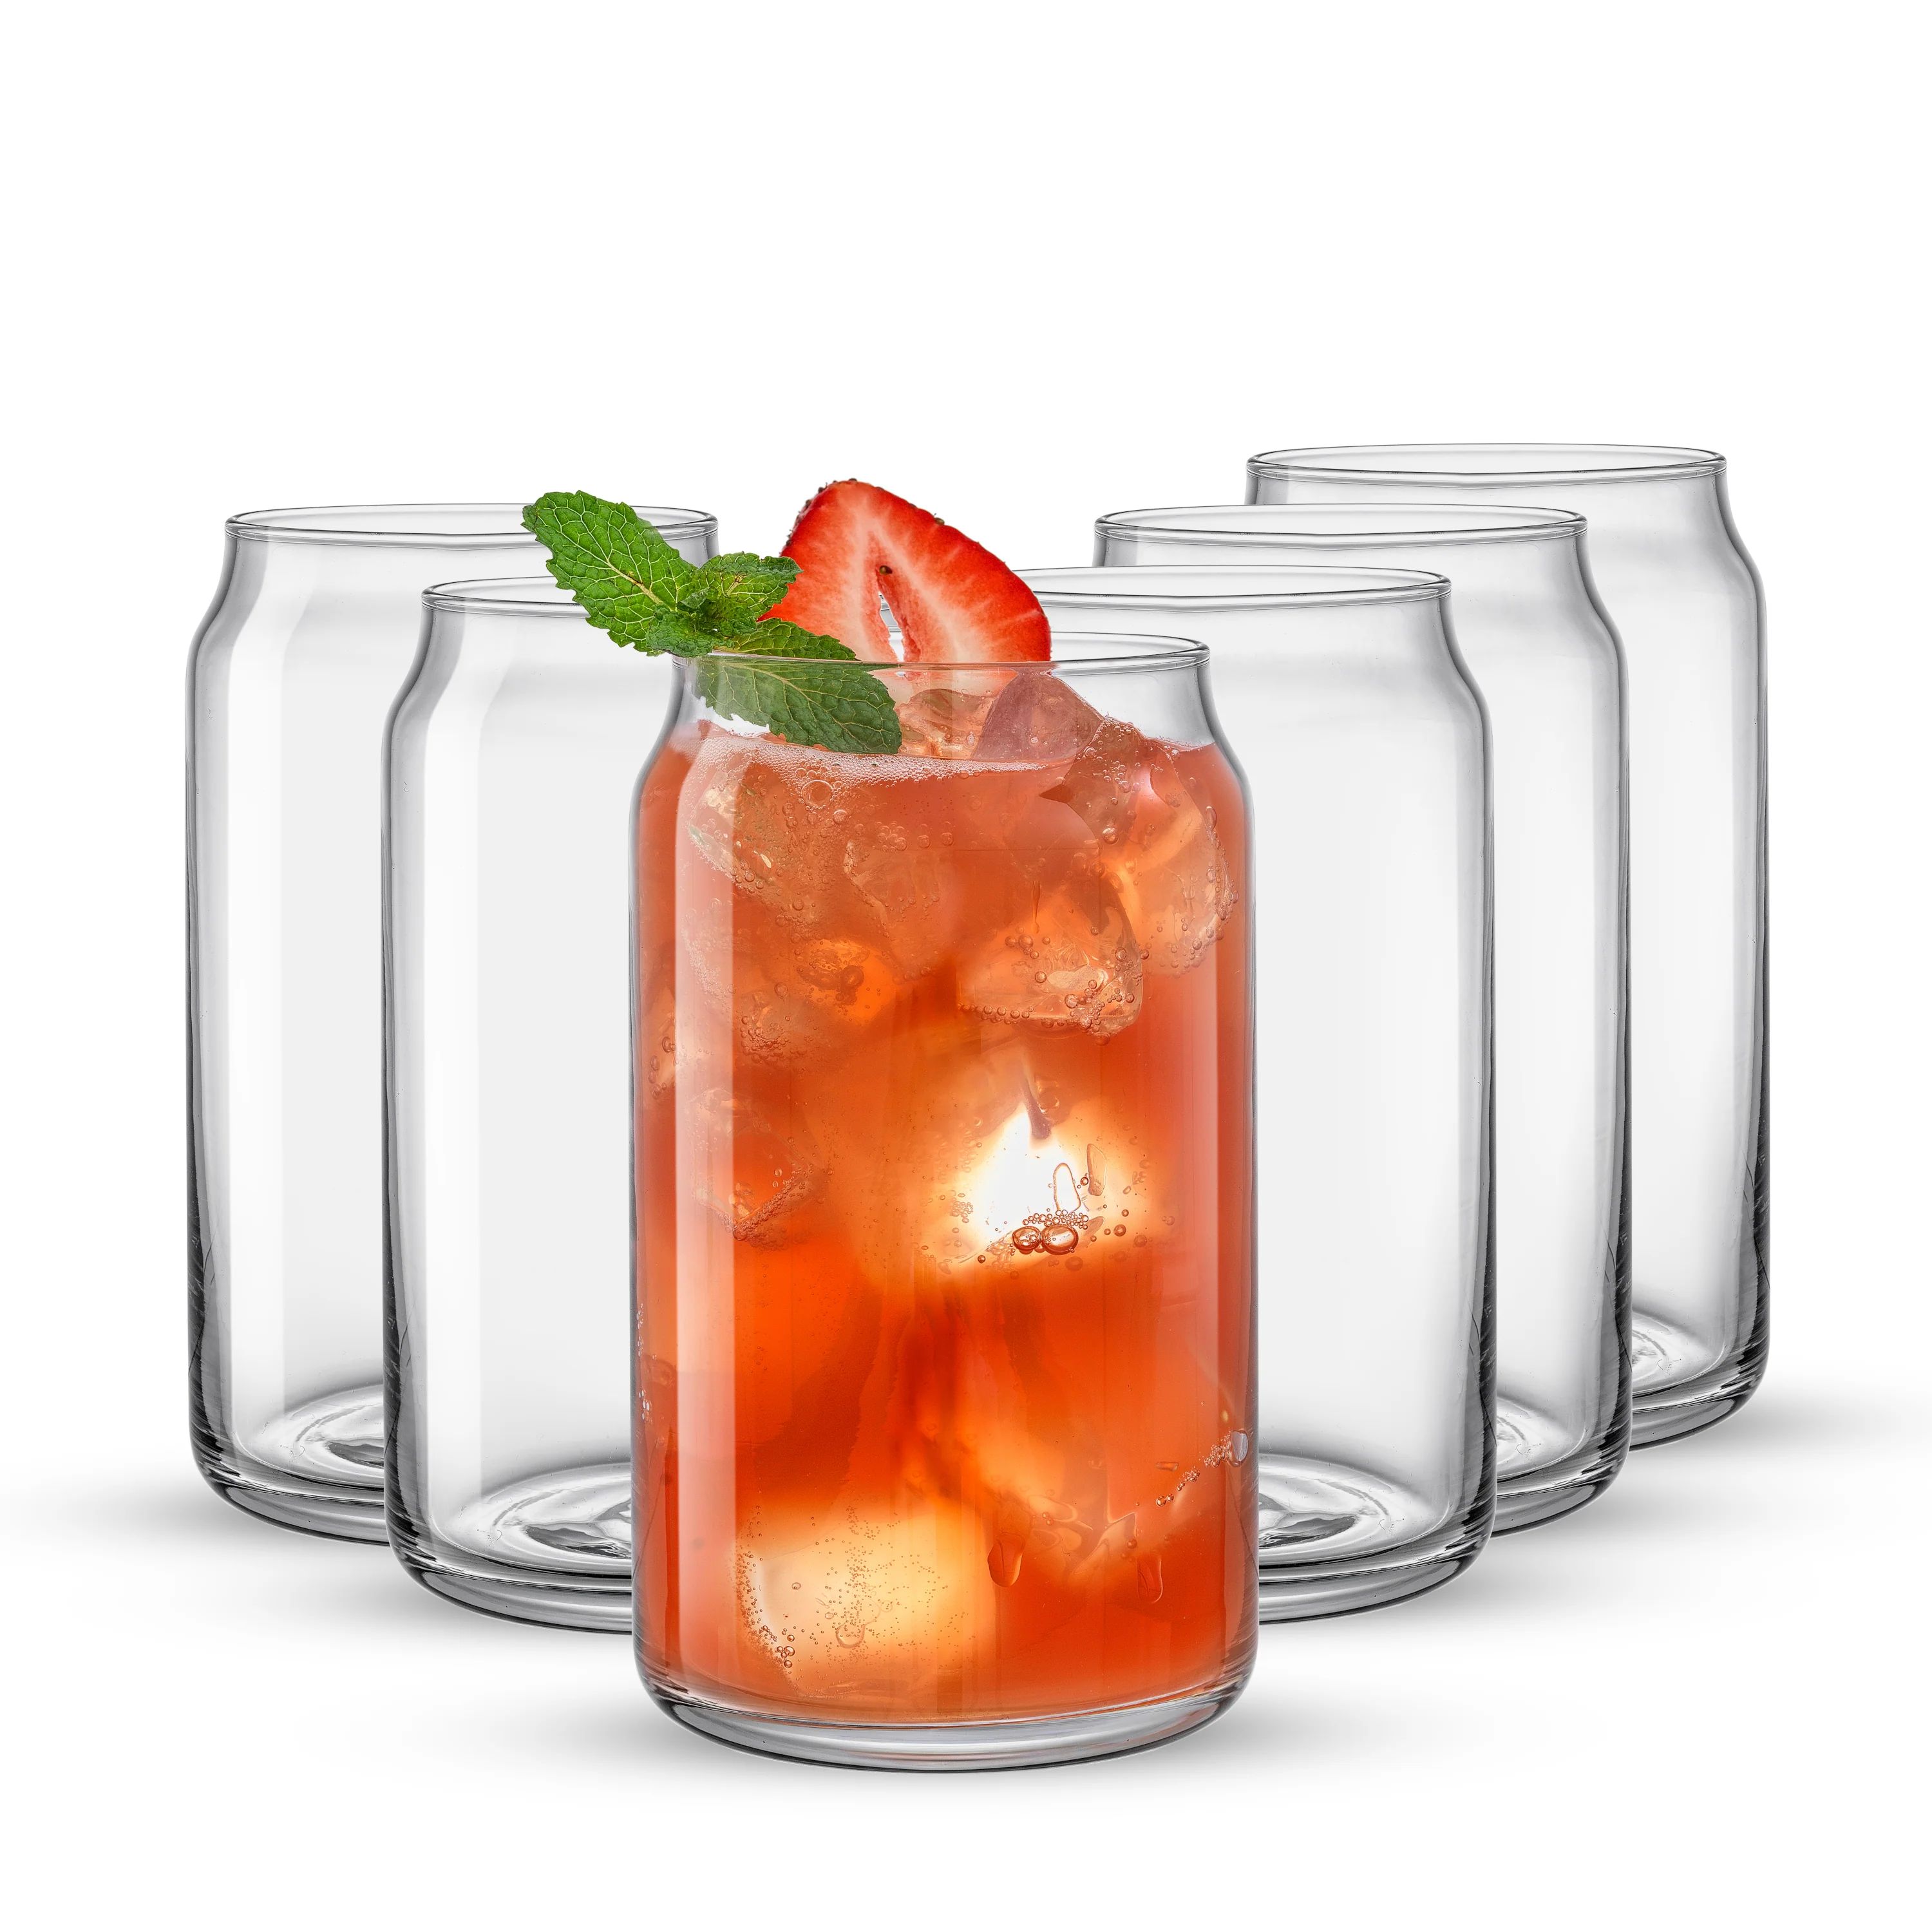 Classic Can Shape Tumbler Drinking Glass Cups - 17 oz - Set of 6 | JoyJolt